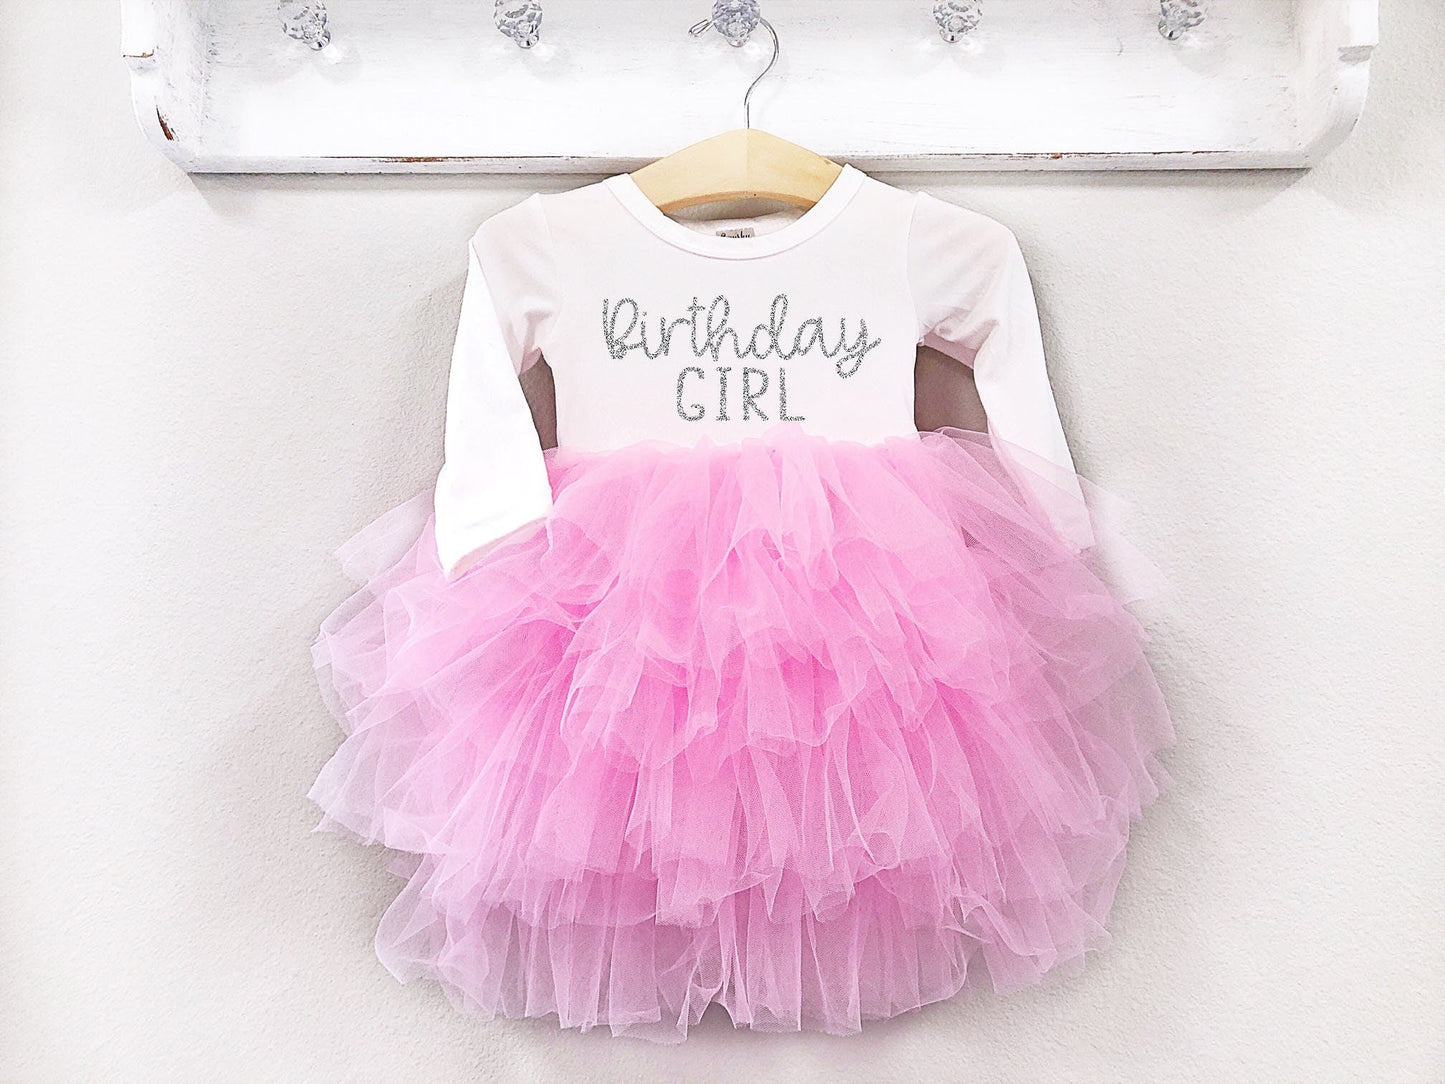 Girls Birthday Dress Pink and Silver Birthday Outfit Long Sleeve Birthday Dress 1st 2nd 3rd 4th 5th Birthday Fluffy Dress - Squishy Cheeks